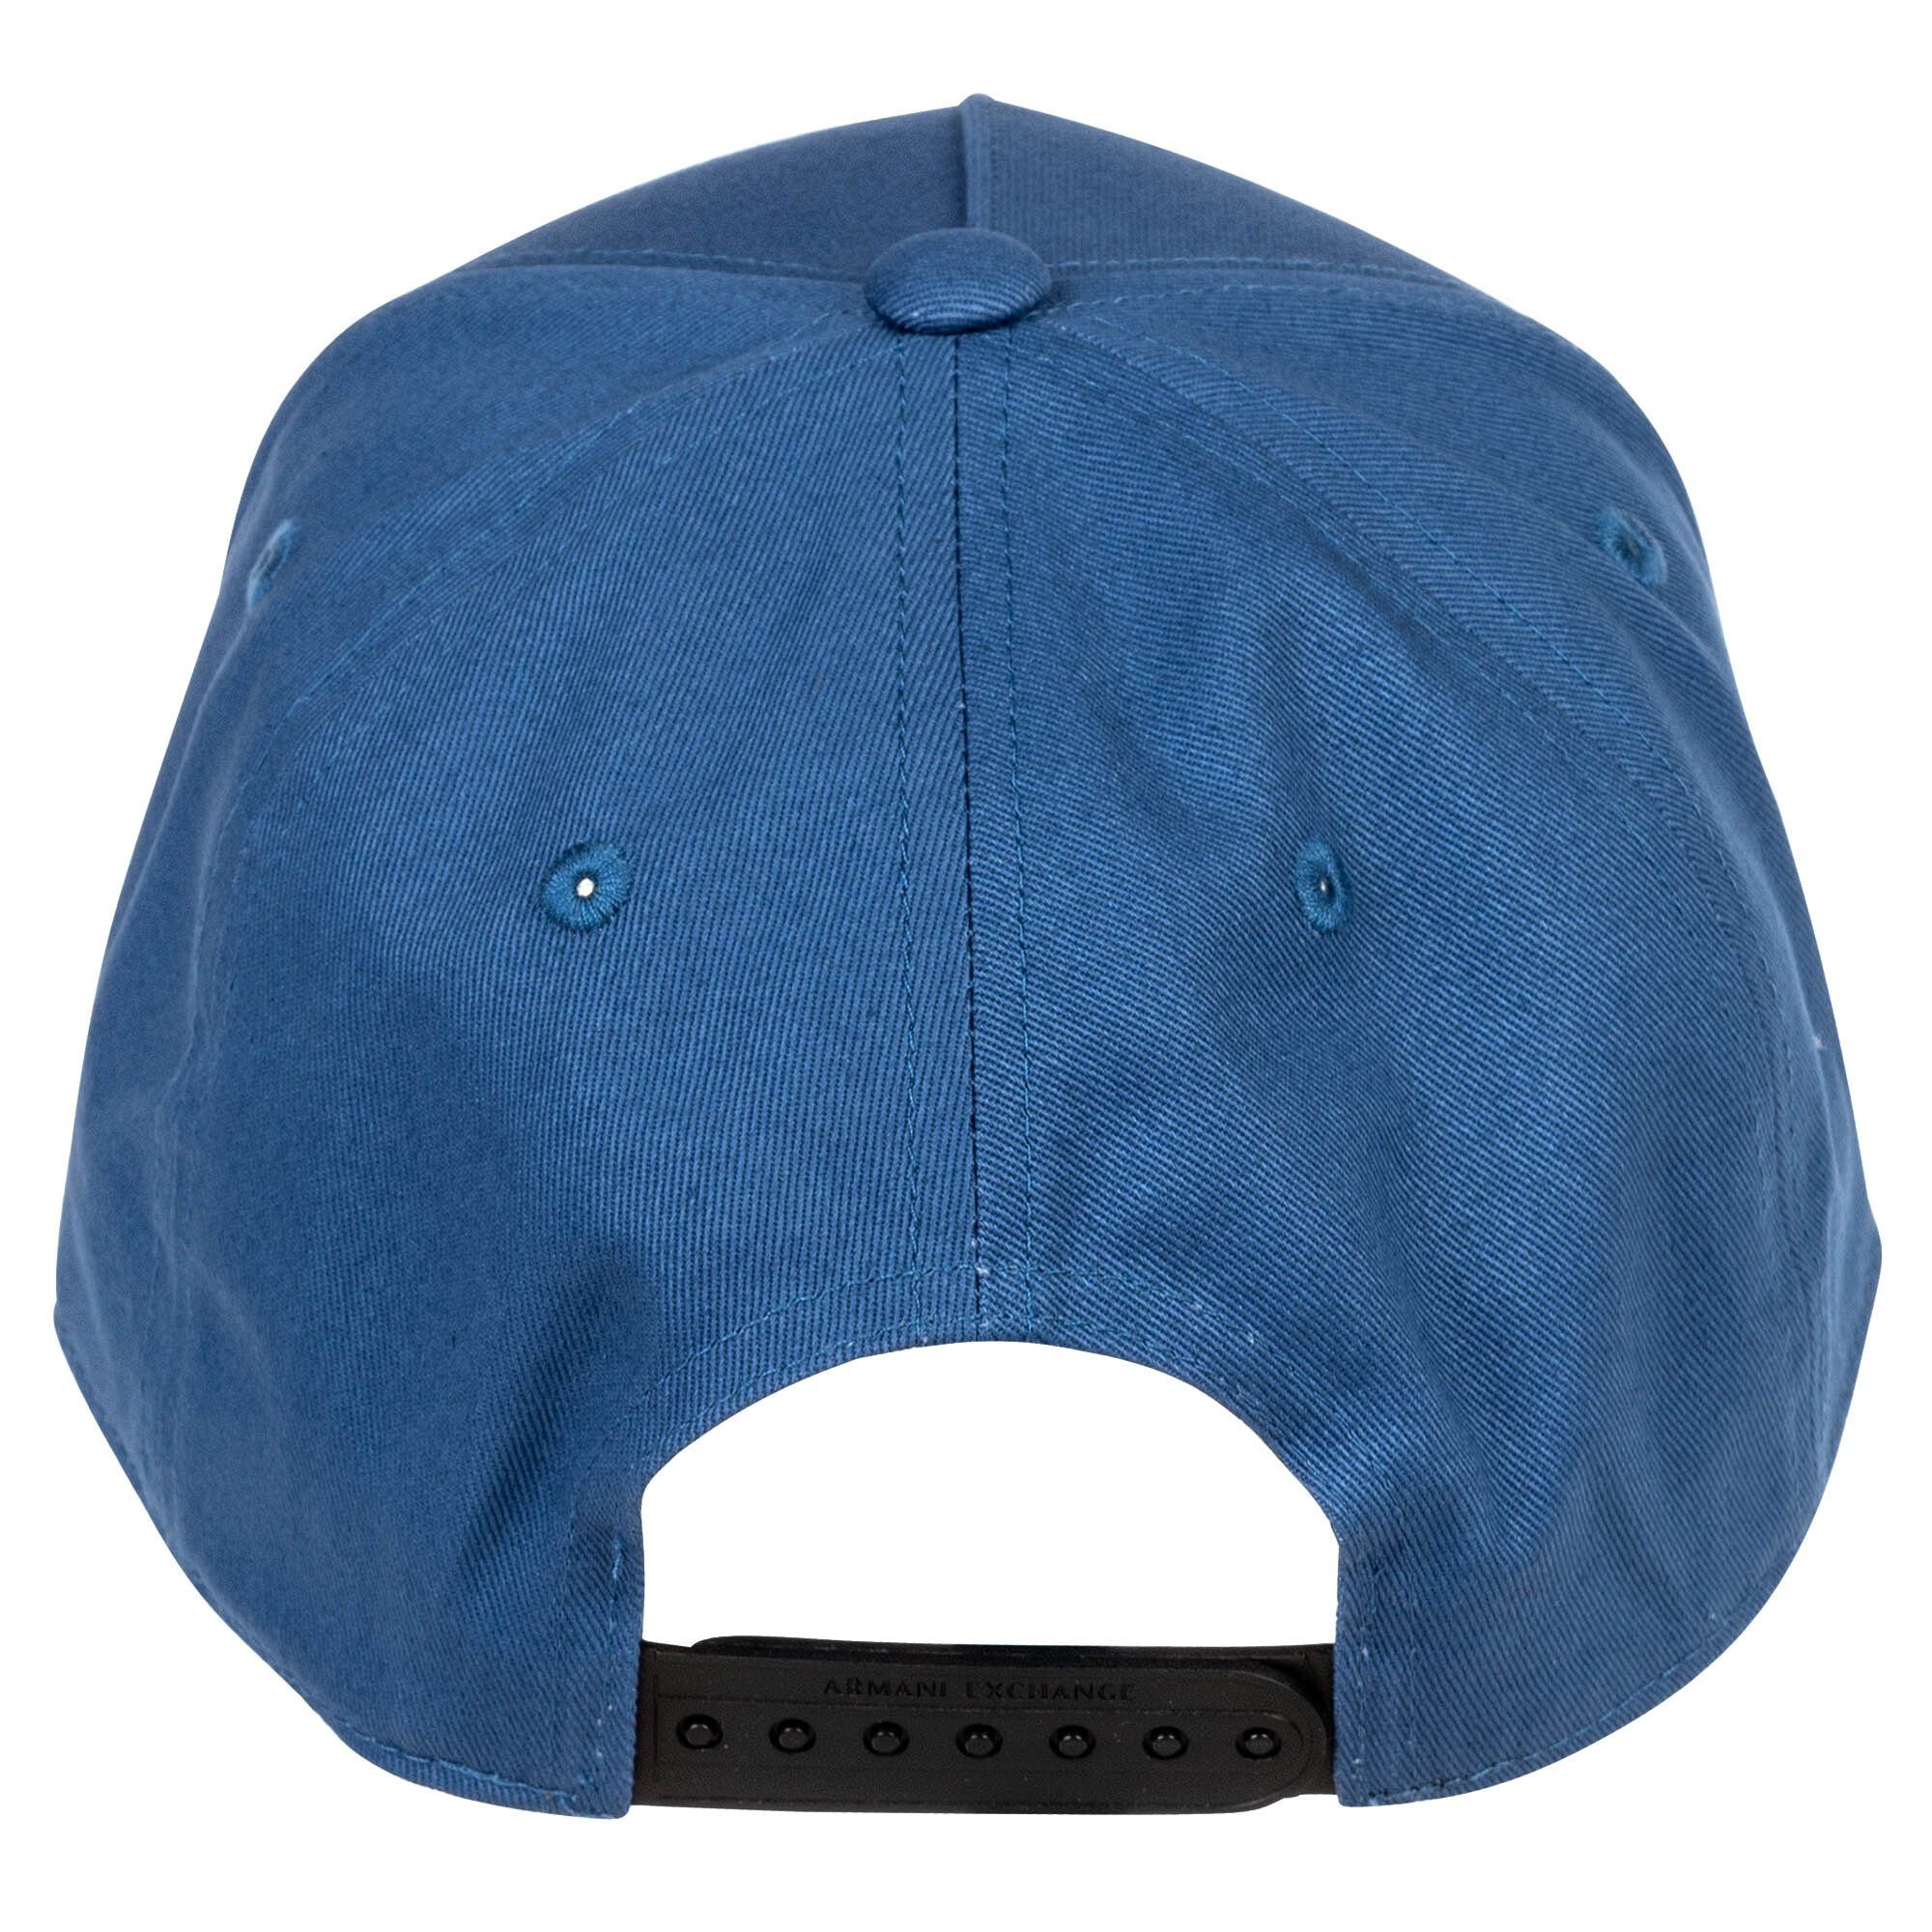 ARMANI EXCHANGE Baseball Cap - Size Kappe, Blau Cap One Logo, Baseball Herren